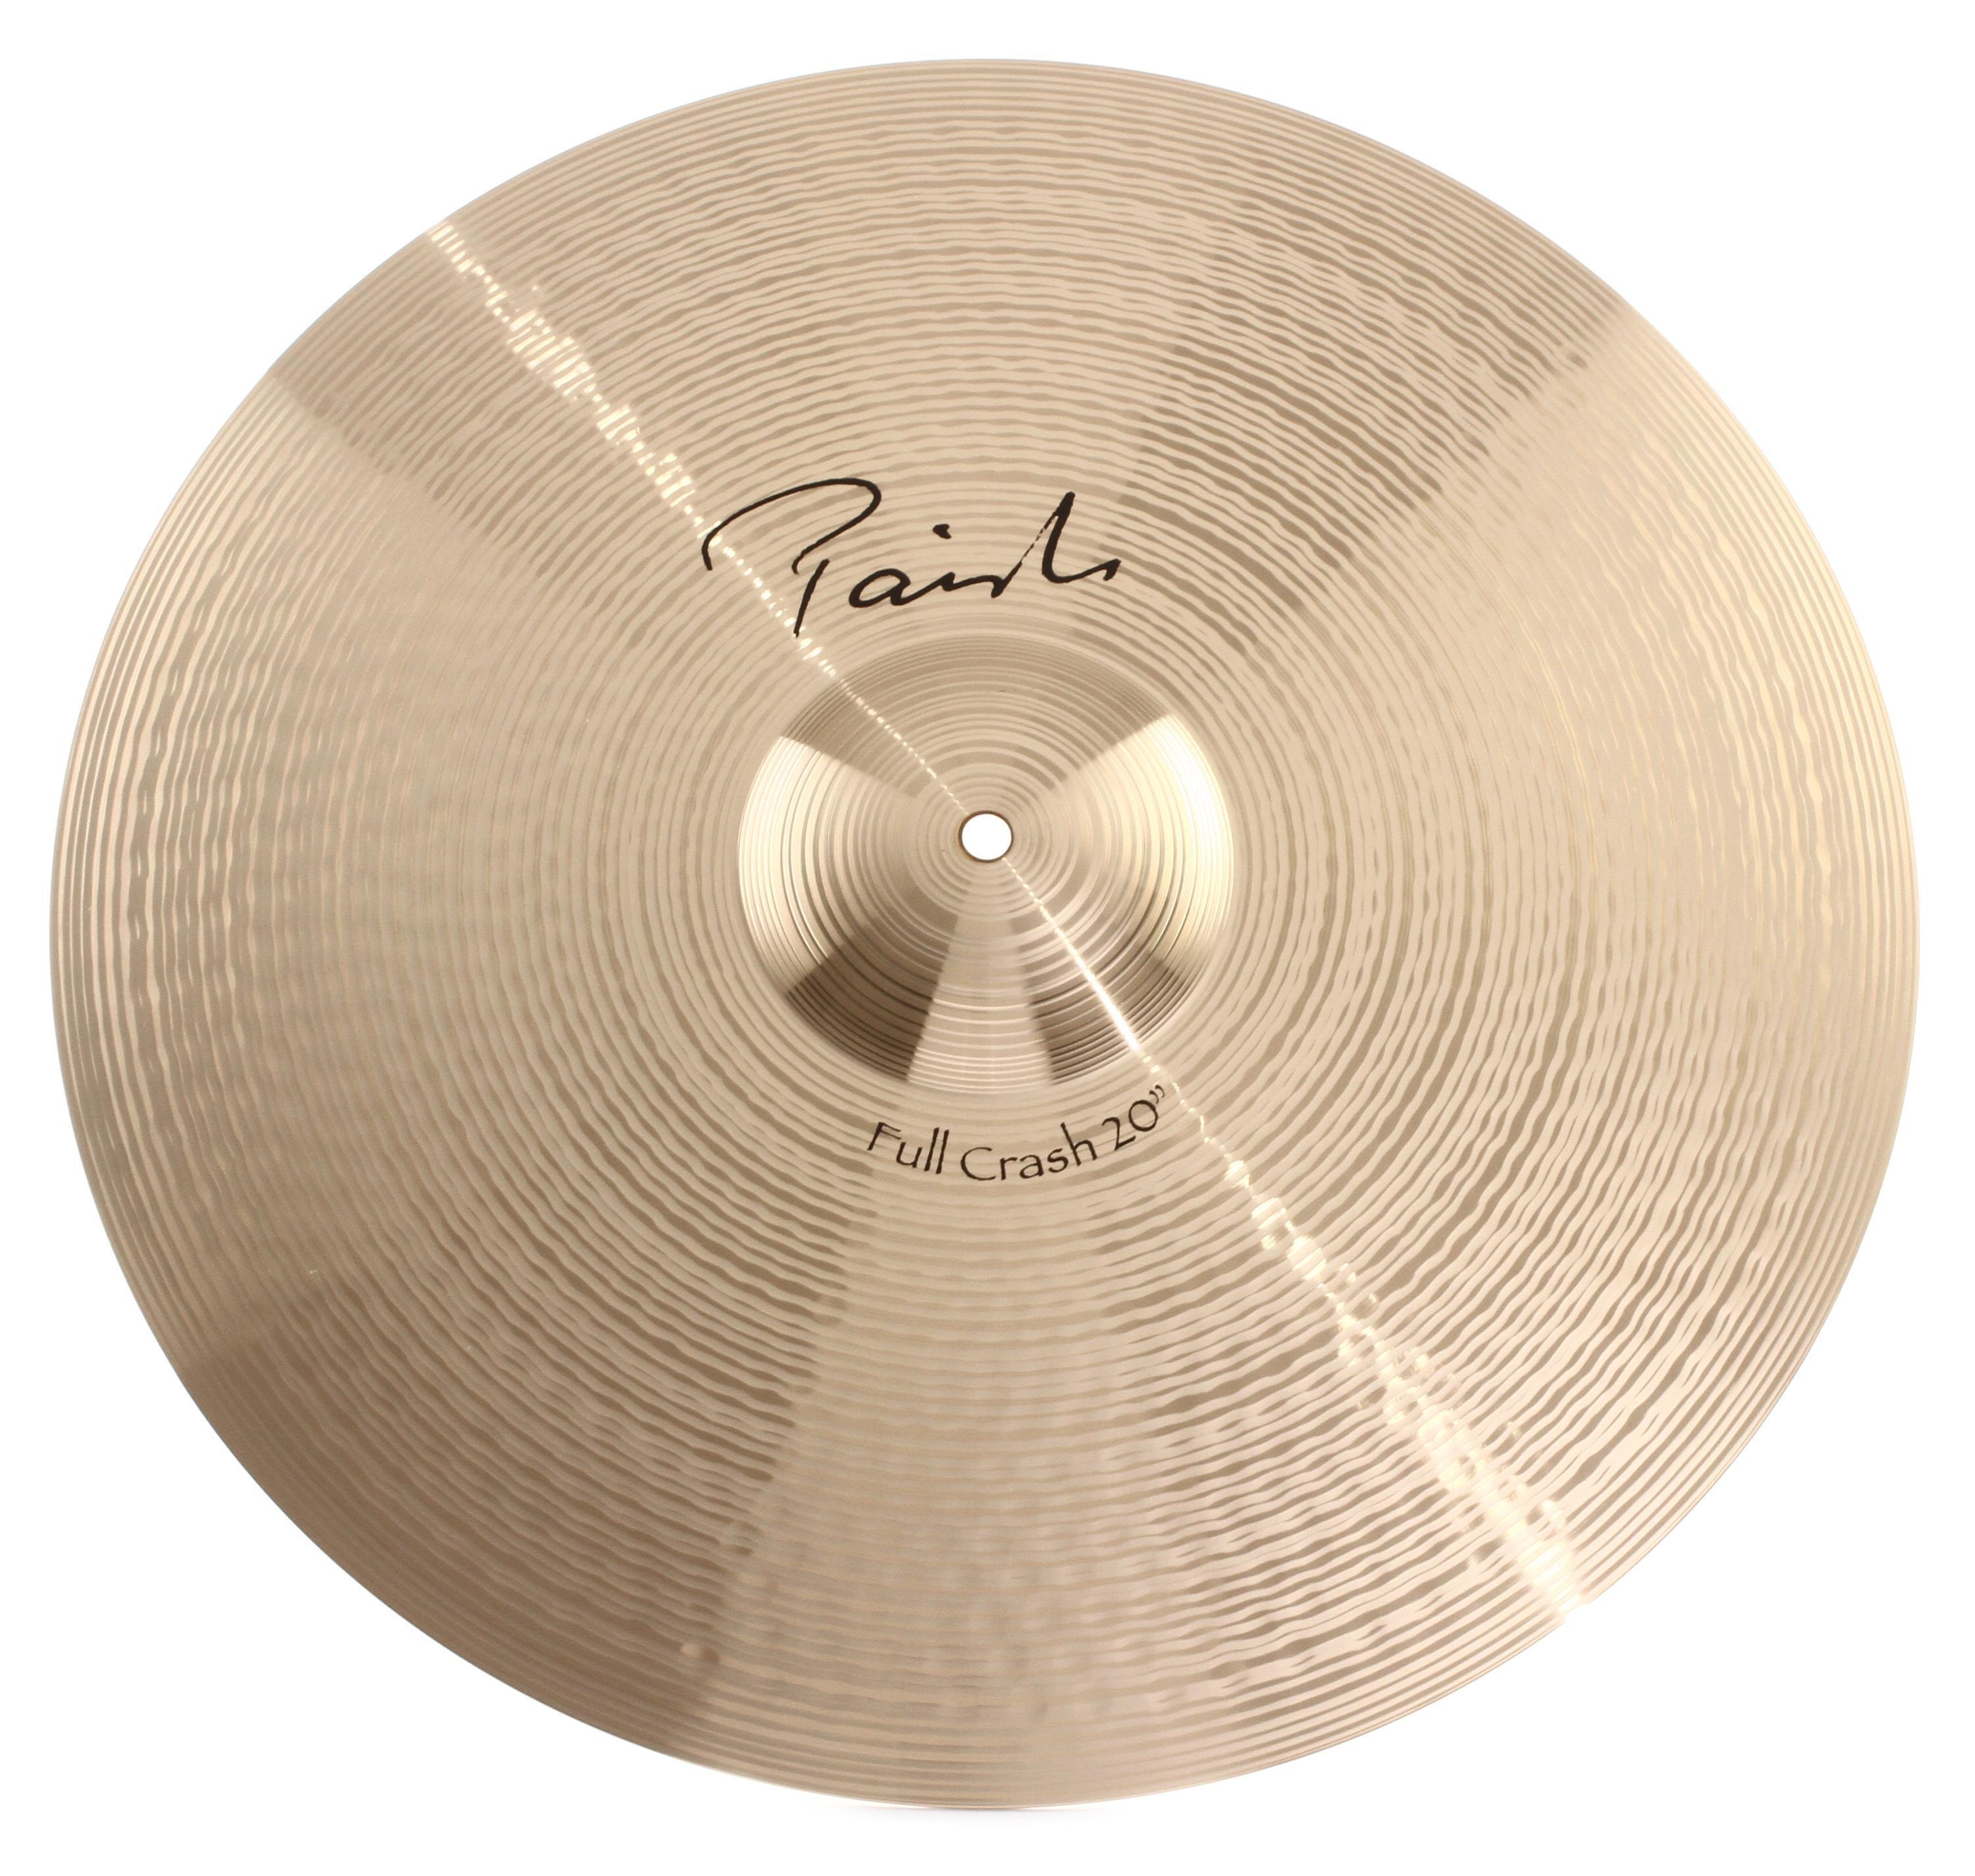 Paiste 20 inch Signature Full Crash Cymbal